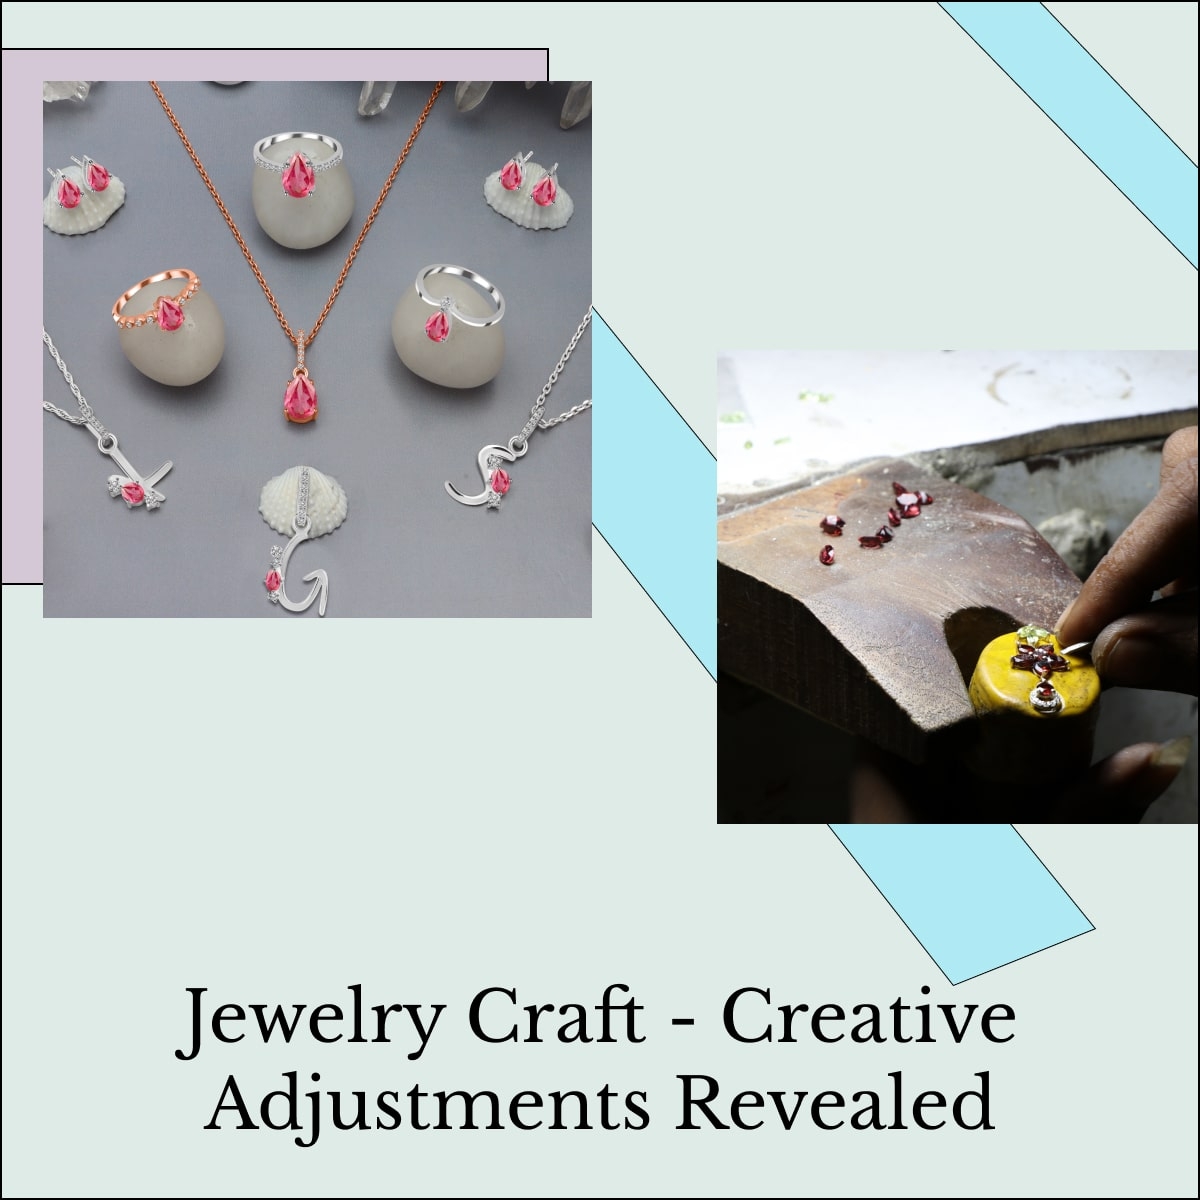 Design Jewelry: Adjusting Creativity and Craftsmanship